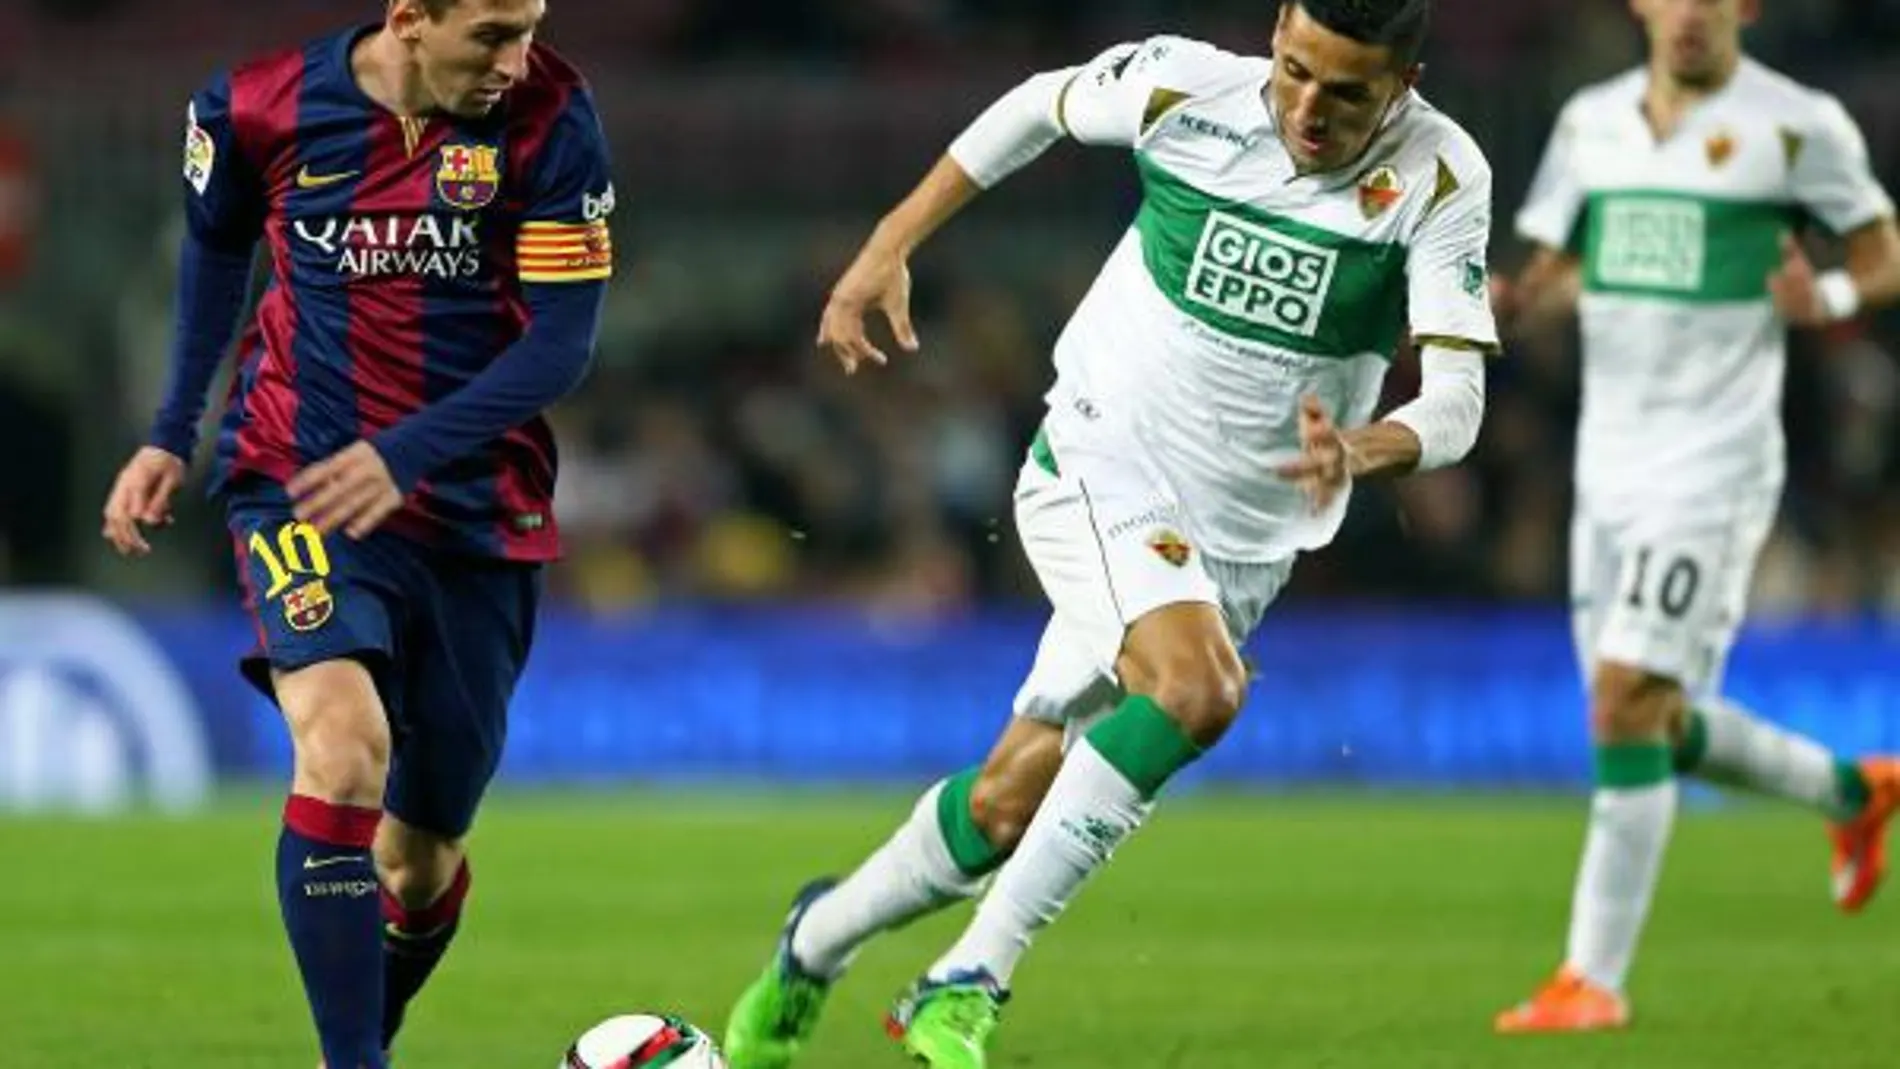 Messi disputa un balón con el centrocampista del Elche Fayçal Fajr